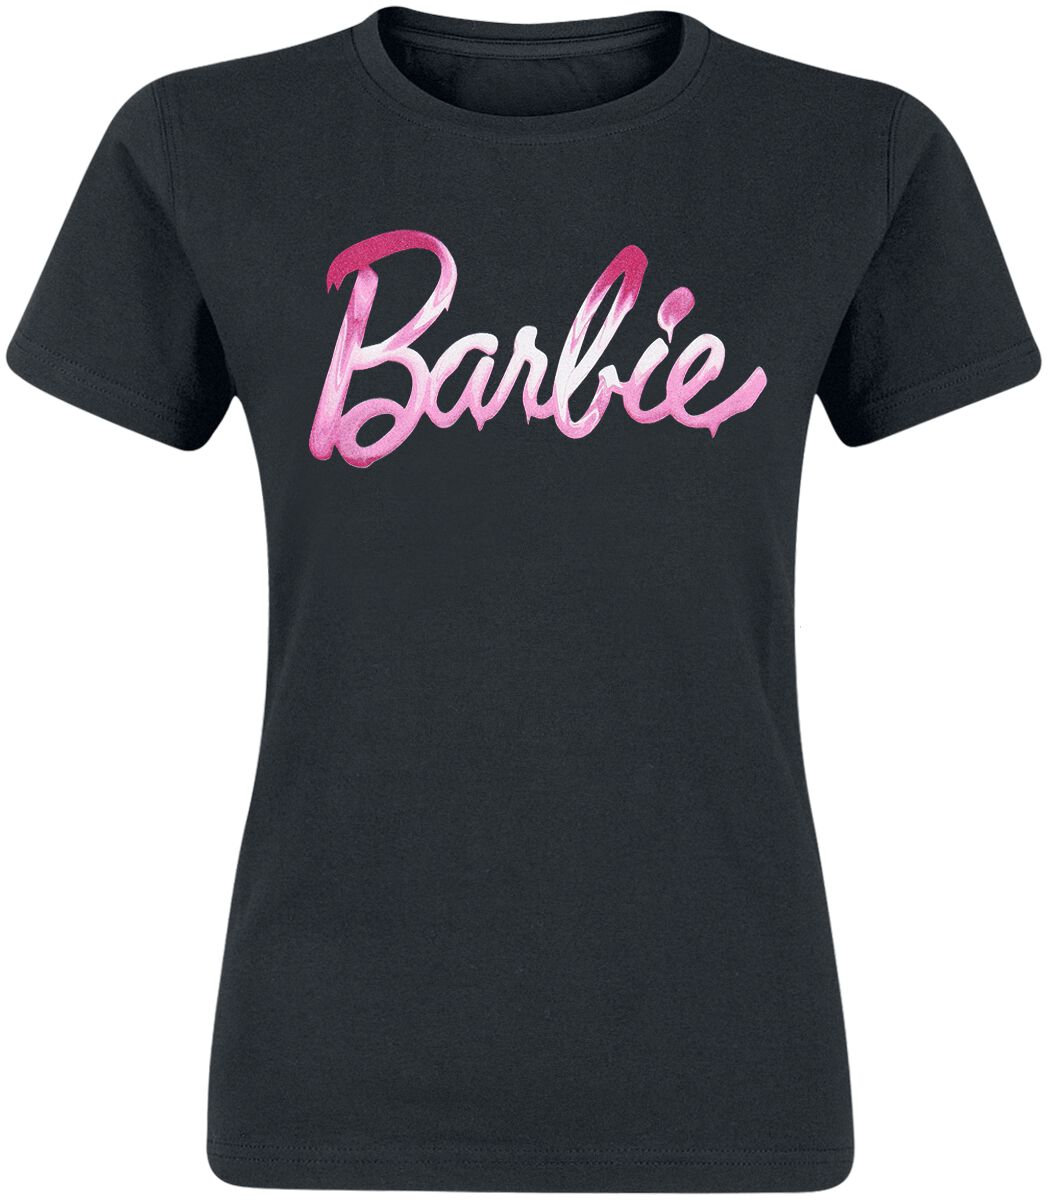 Barbie - Melted - T-Shirt - schwarz